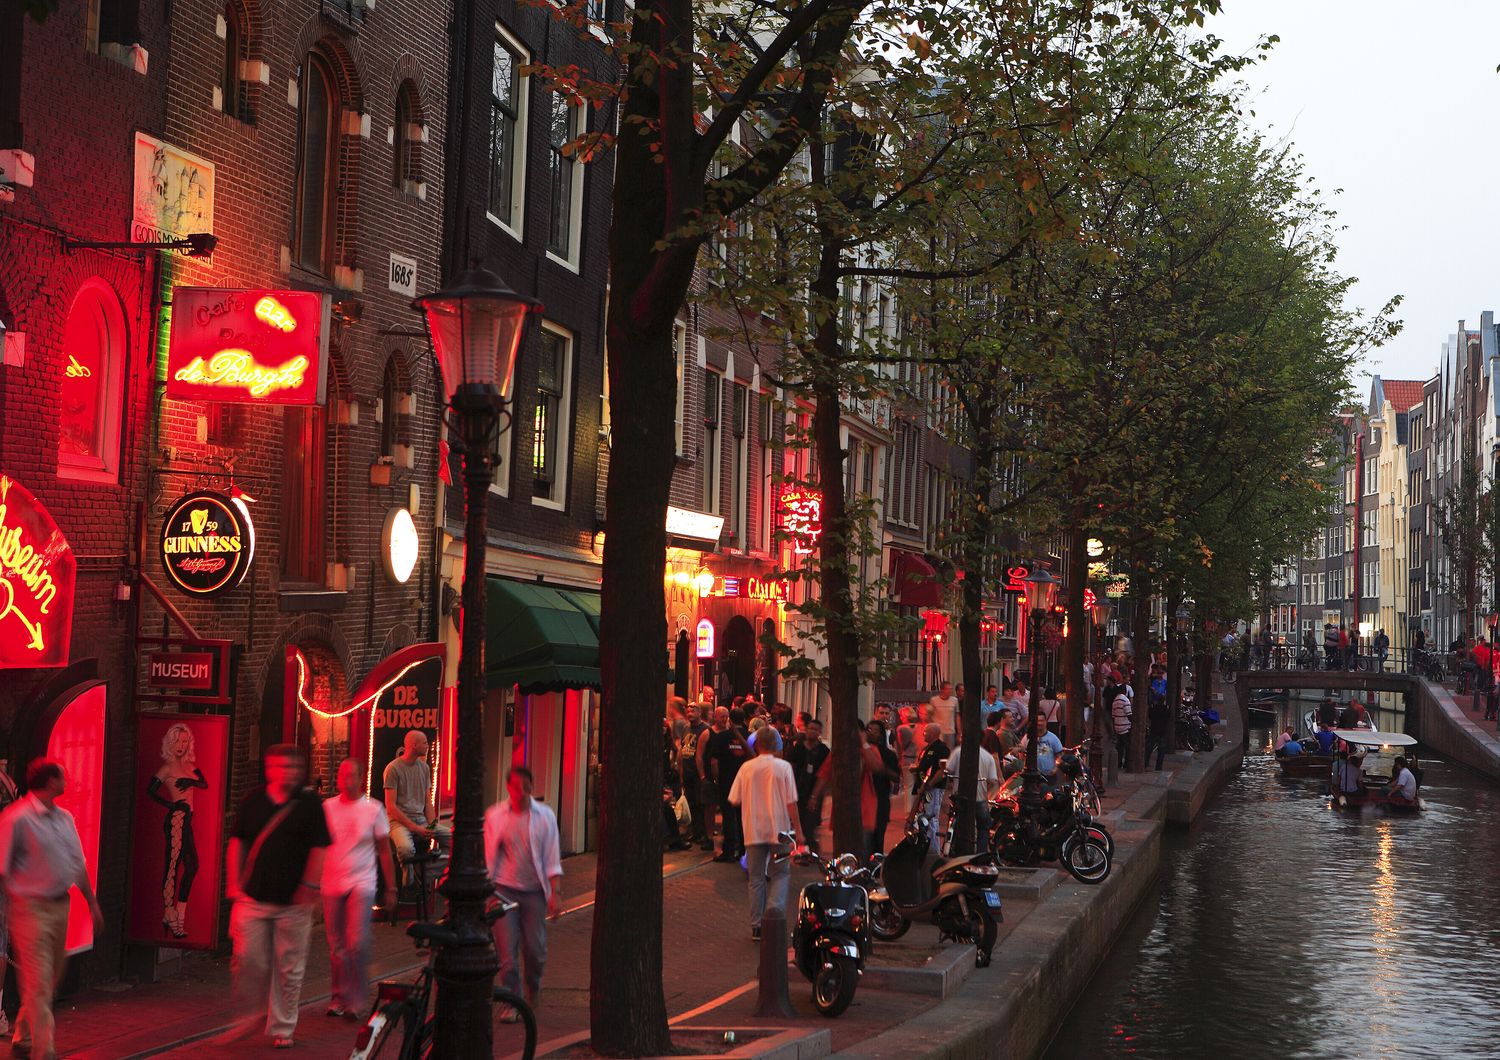 stretta nel quartiere a luci rosse amsterdam